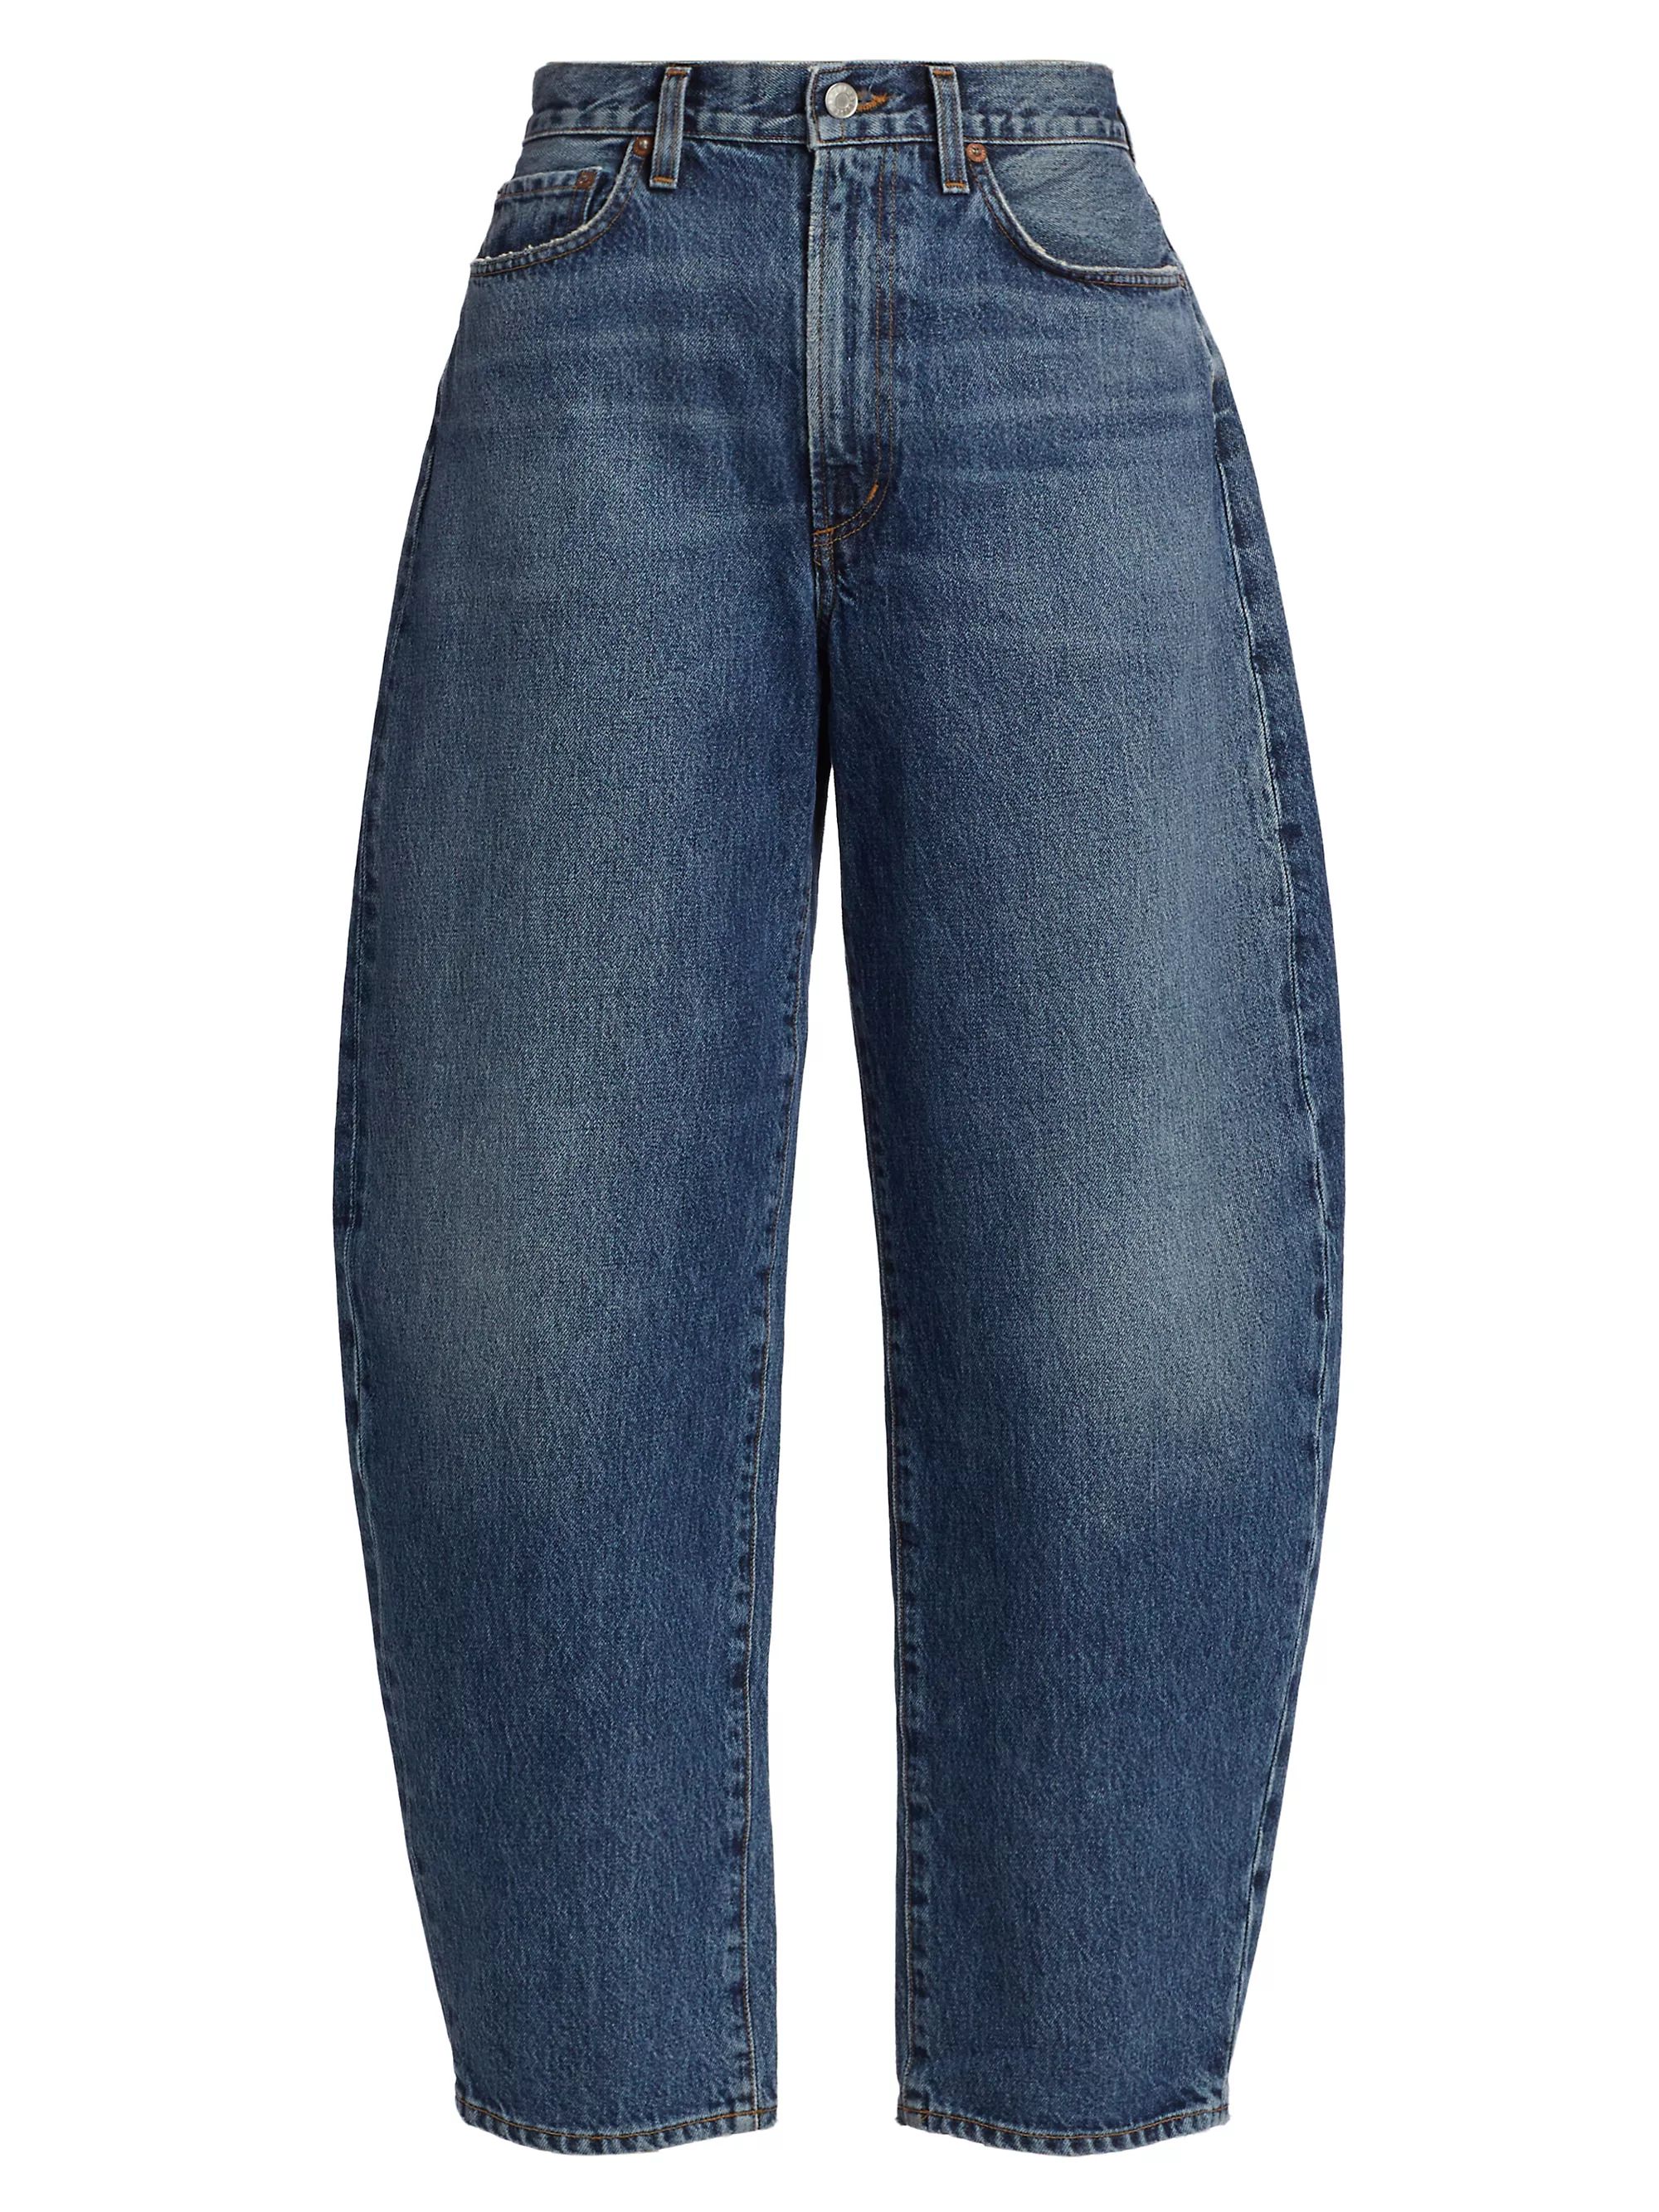 ControlAll High WaistedAgoldeBalloon High-Rise Rigid Barrel Jeans$248
            
          SELE... | Saks Fifth Avenue